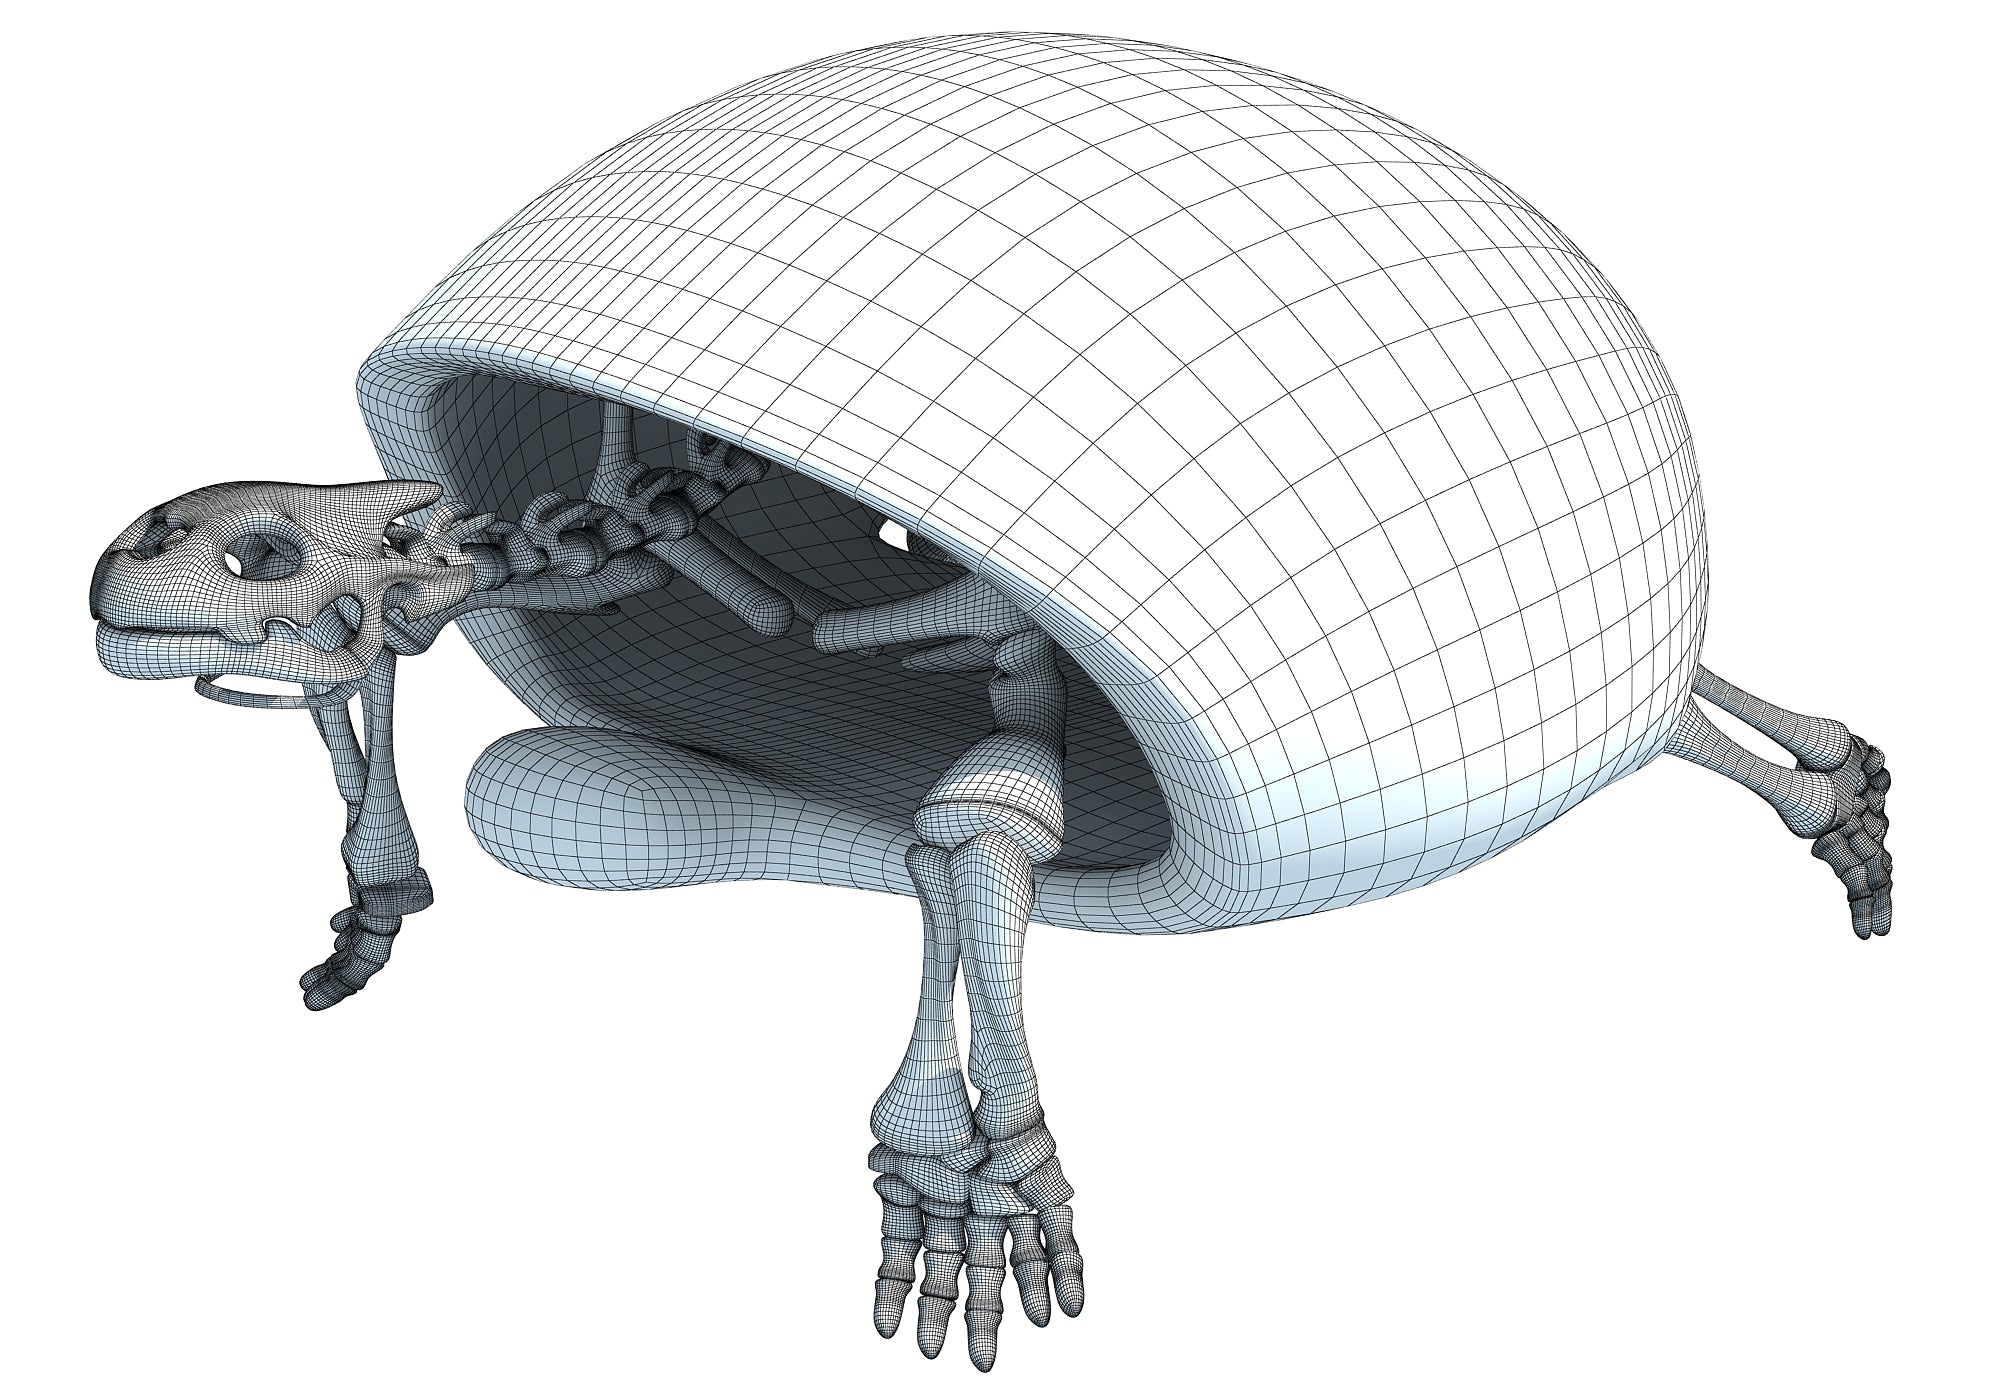 Turtle Skeleton 3D Model